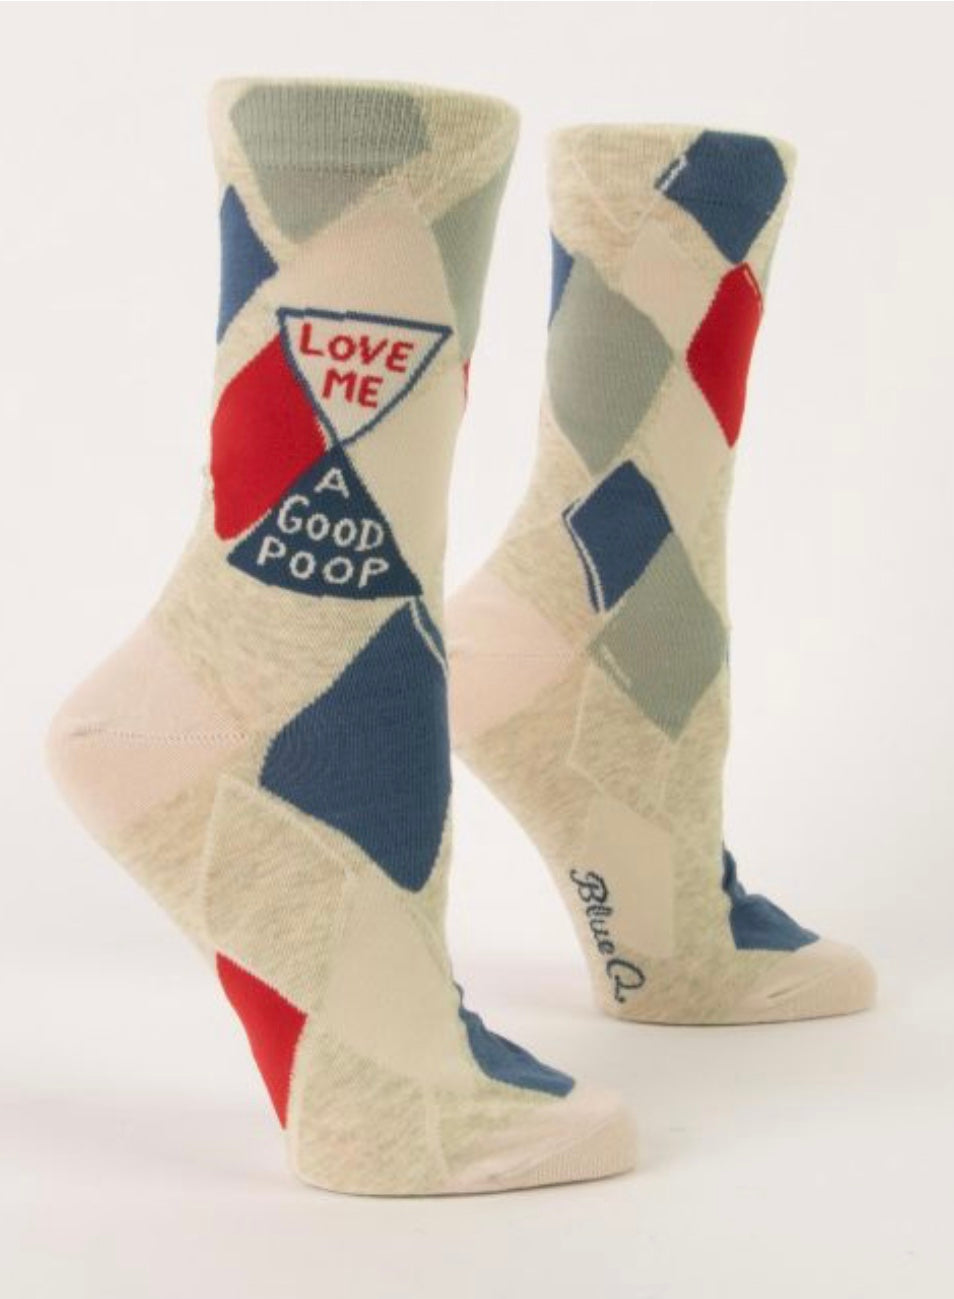 Love Me a Good Poop Women's Crew Novelty Socks